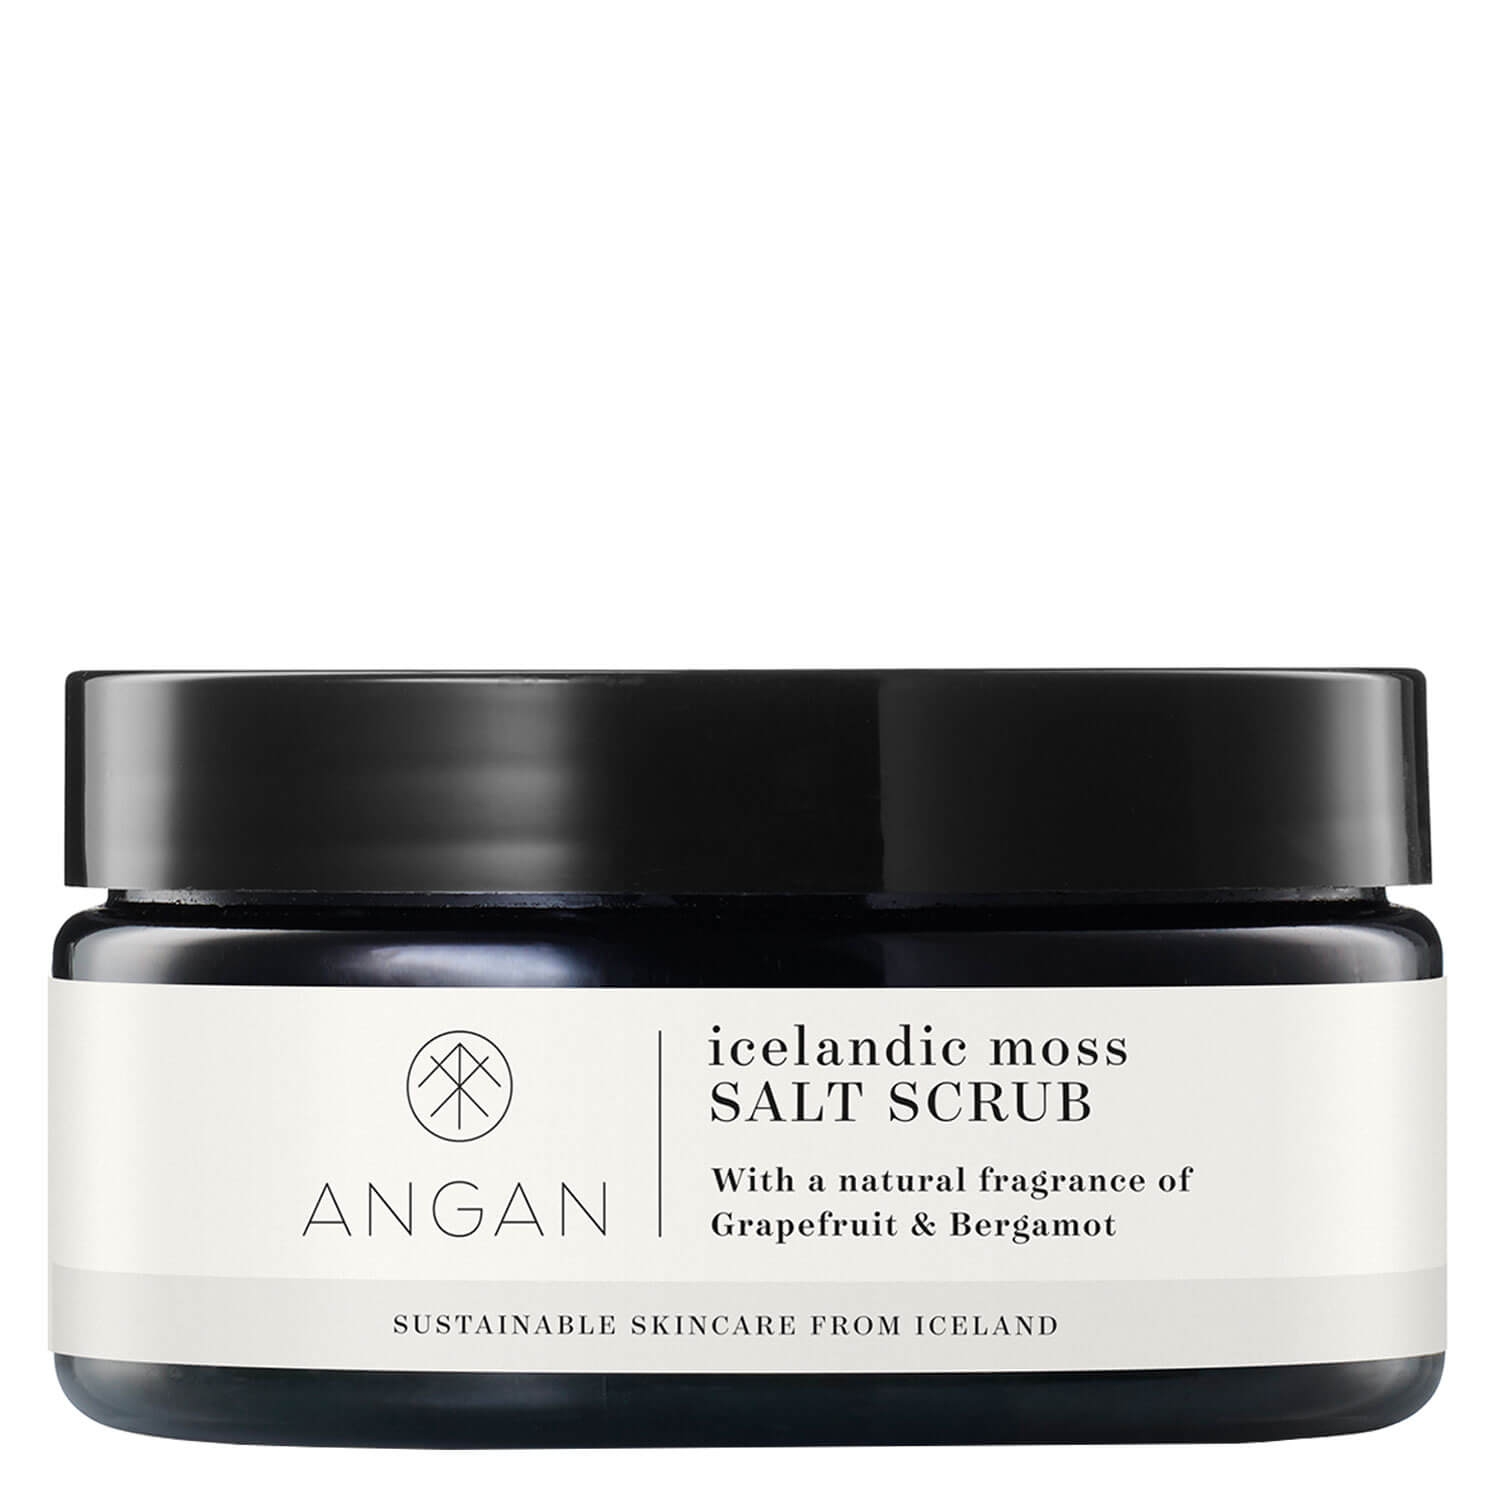 Product image from ANGAN - Icelandic Moss Salt Scrub